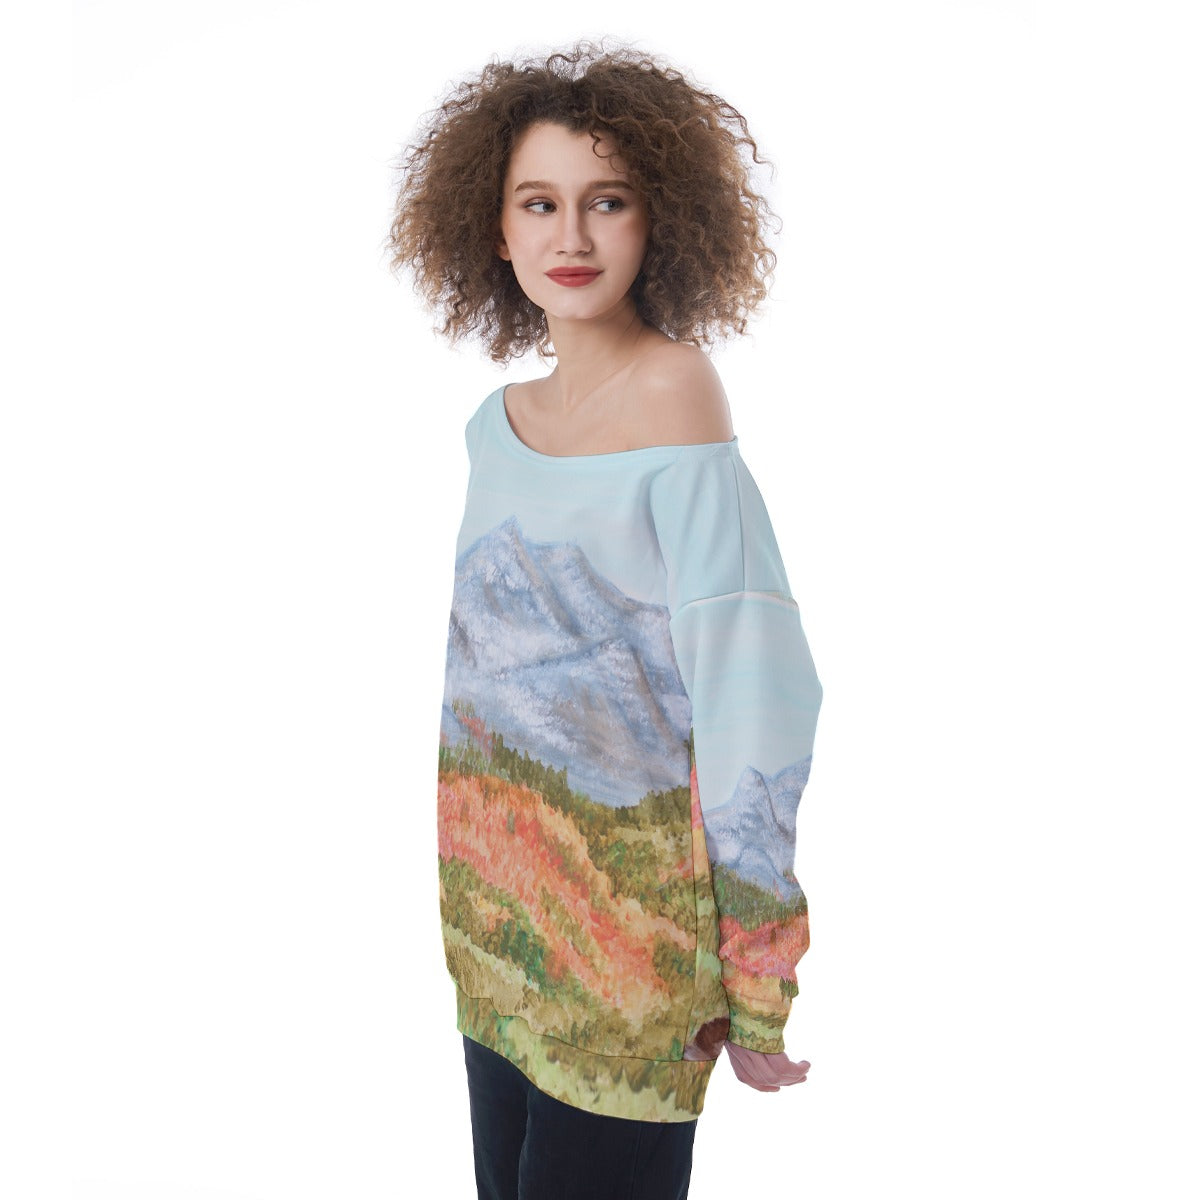 Oversized Women's Mountain Off-Shoulder Sweatshirt